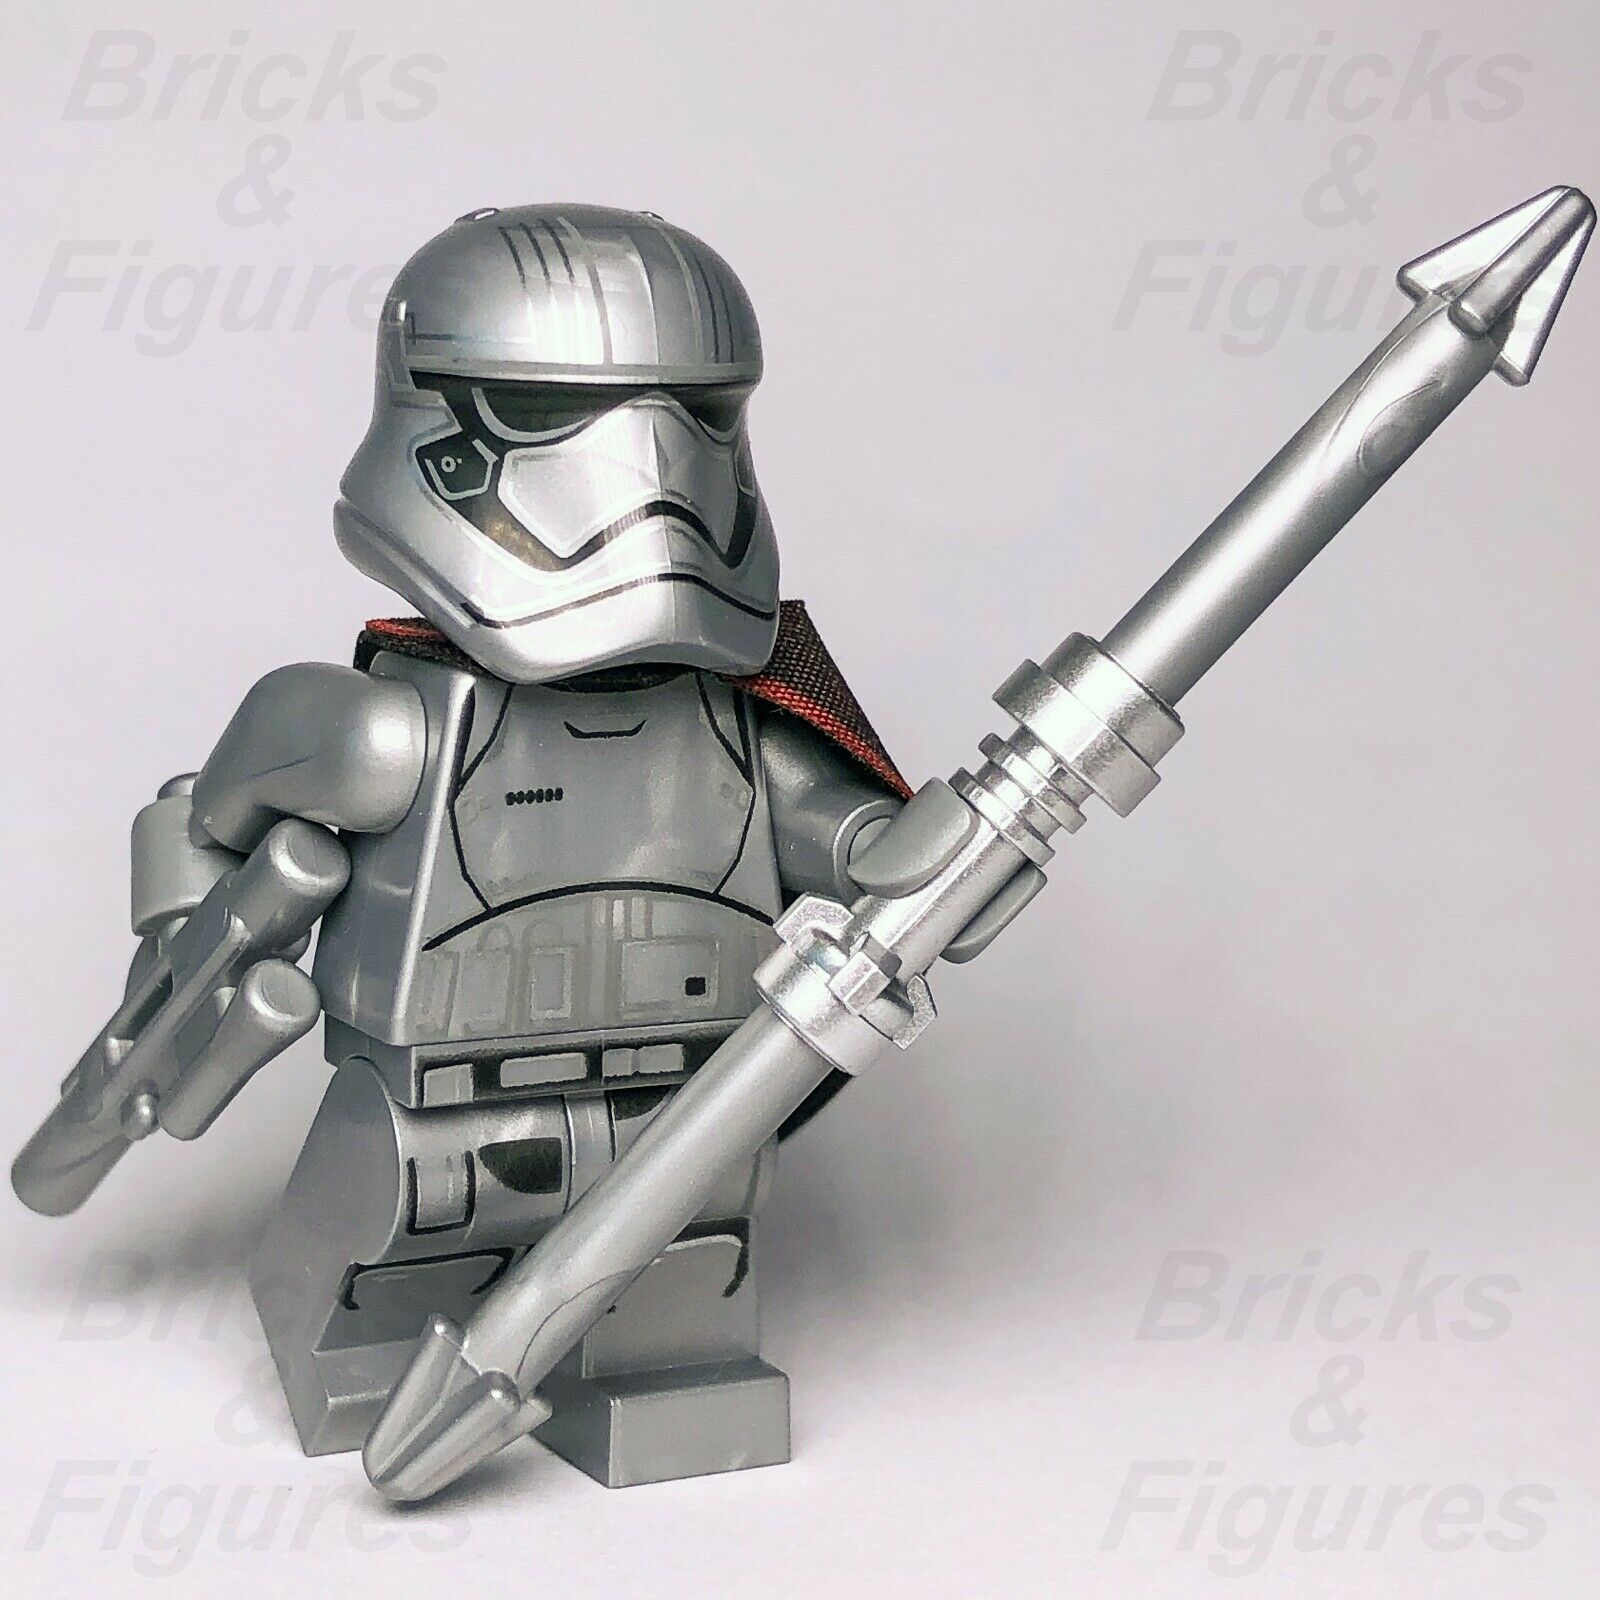 STAR WARS lego CAPTAIN PHASMA first order stormtrooper GENUINE 75201 at-st NEW - Bricks & Figures